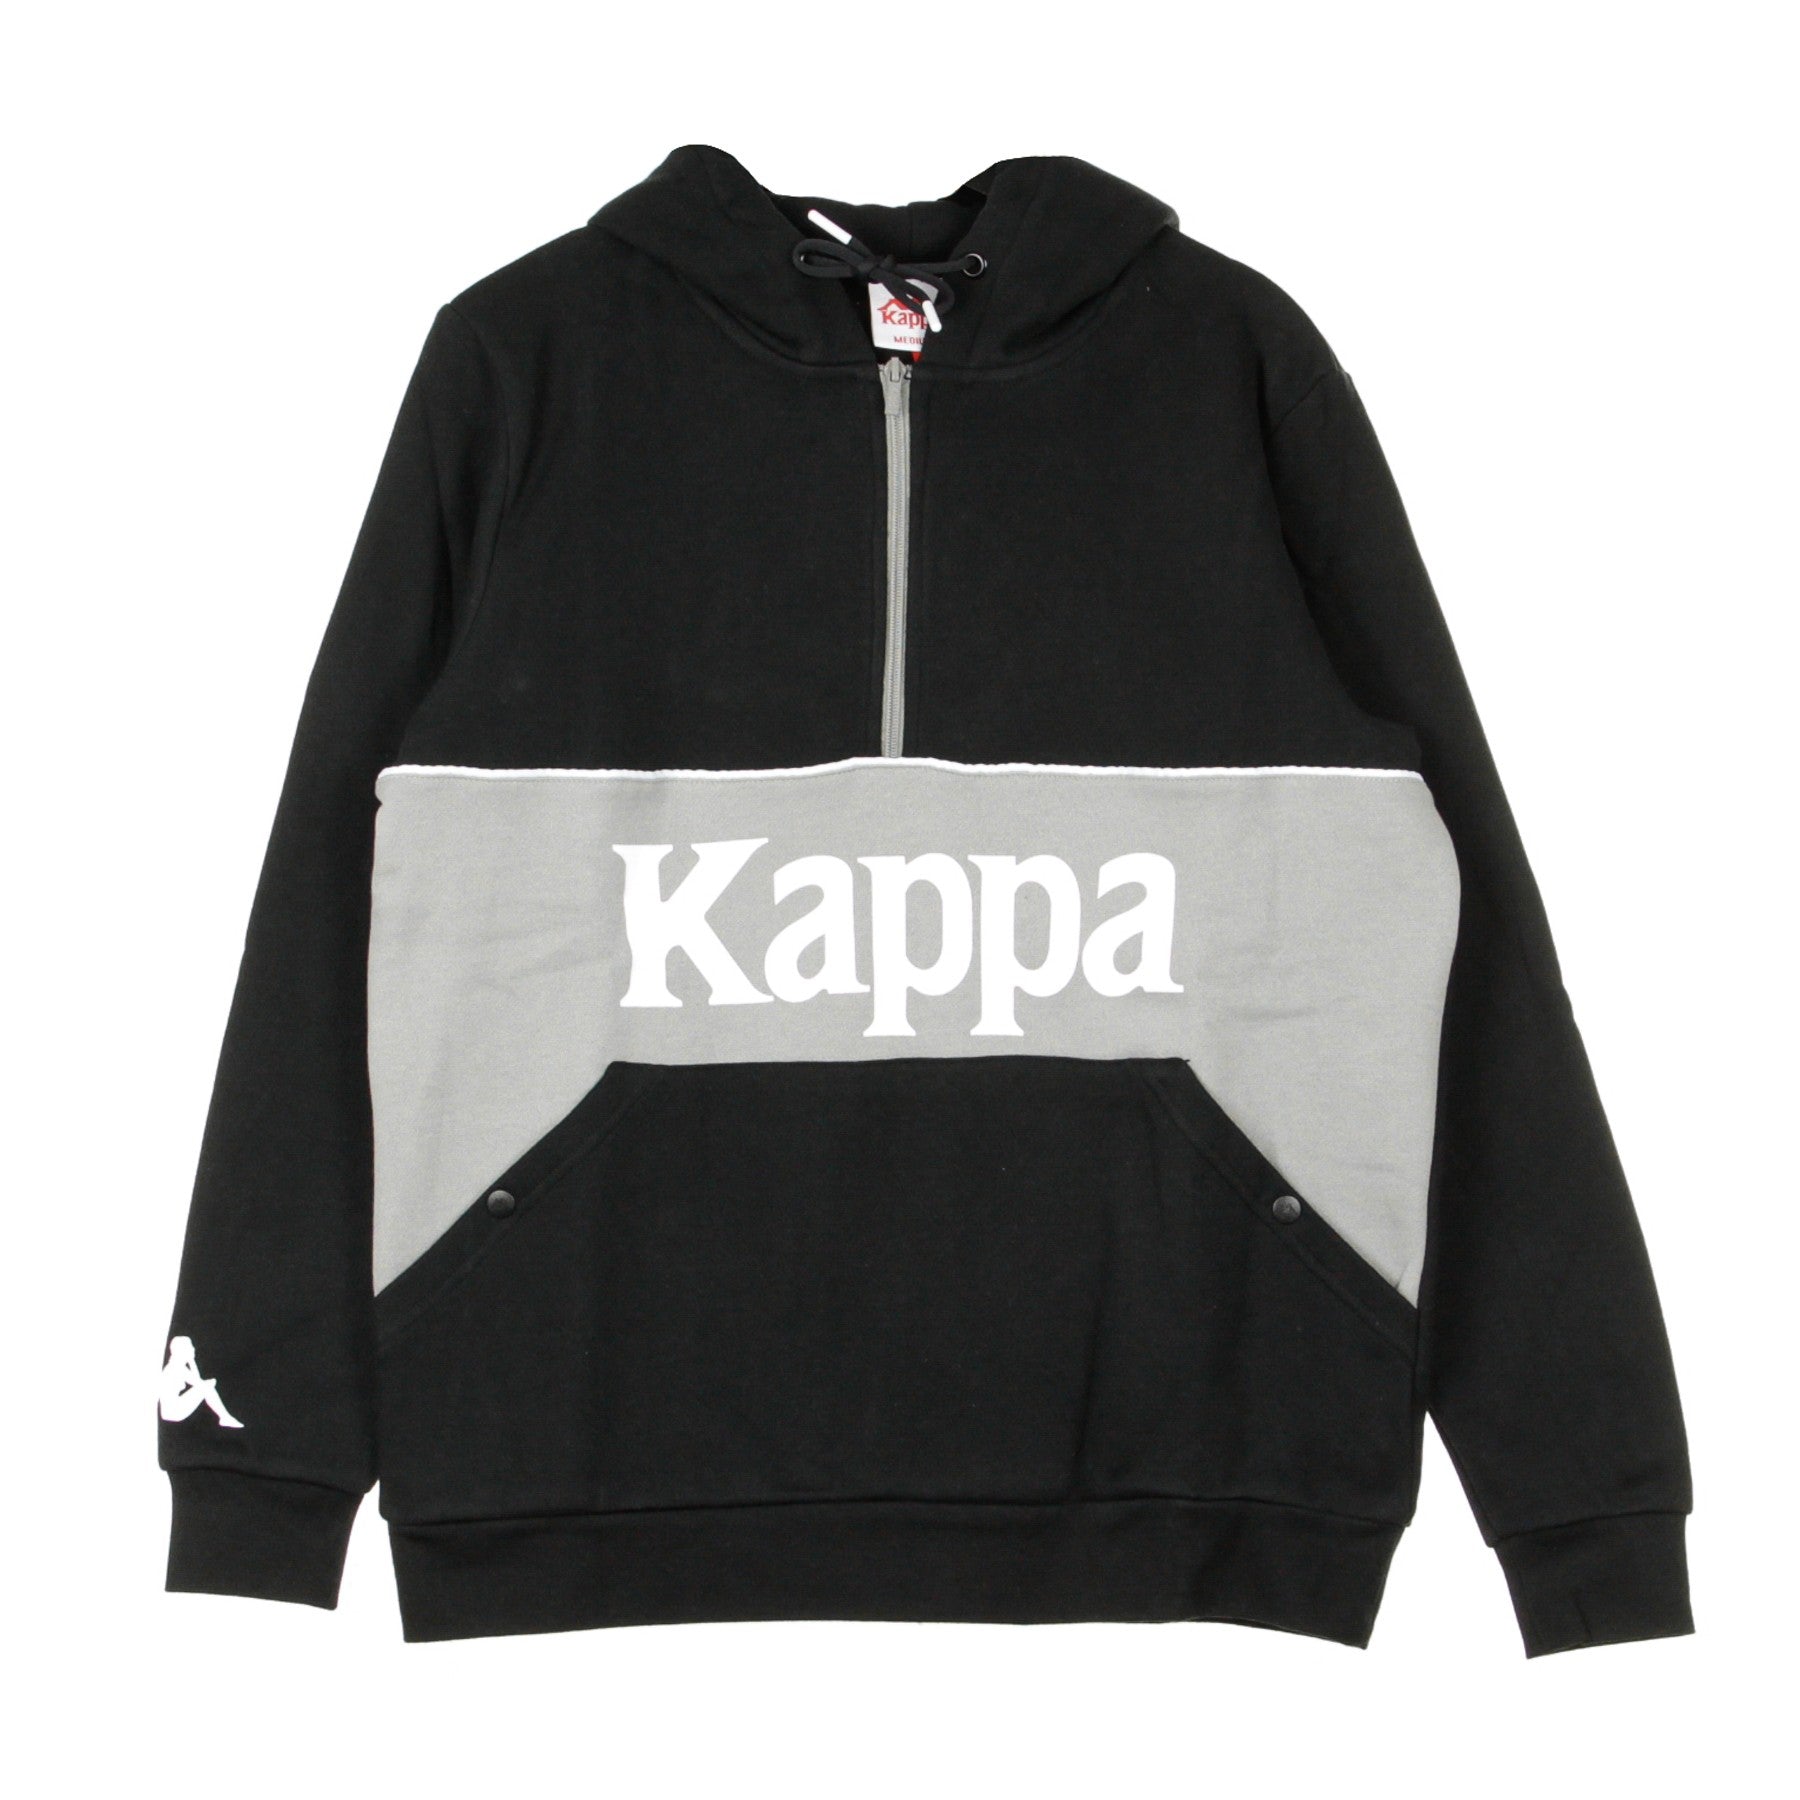 Kappa, Felpa Cappuccio Zip Uomo Authentic 90 Barna, Black/grey Flint/white